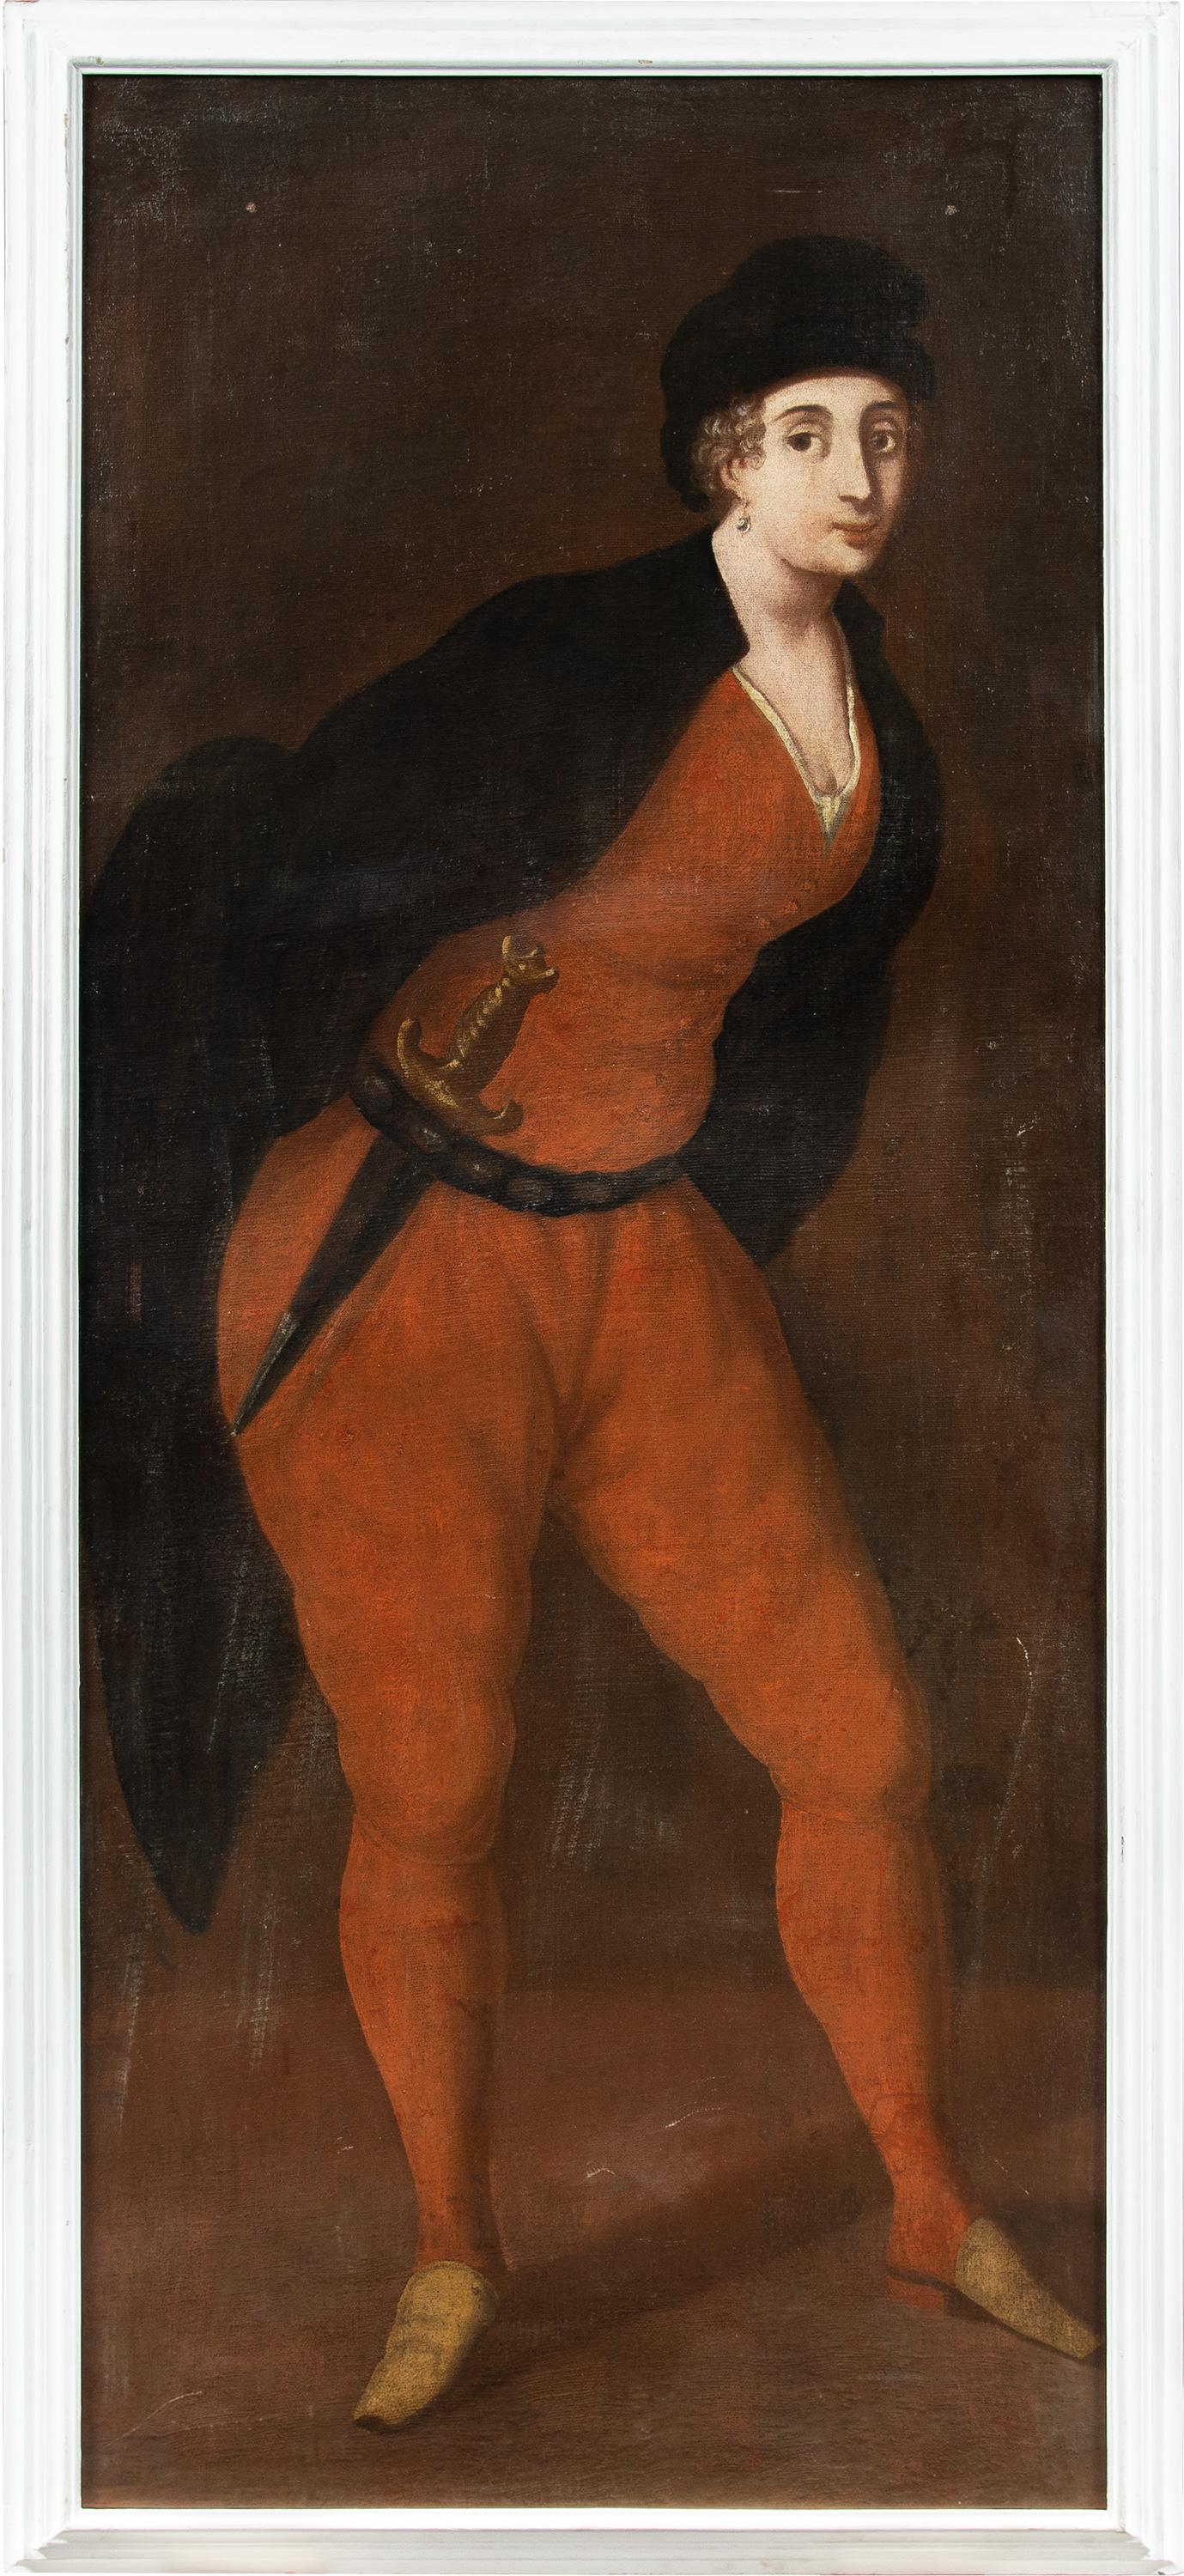 Unknown Figurative Painting - Venetian Rococò painter - 18th century mask figure painting - Pantalone Carnival